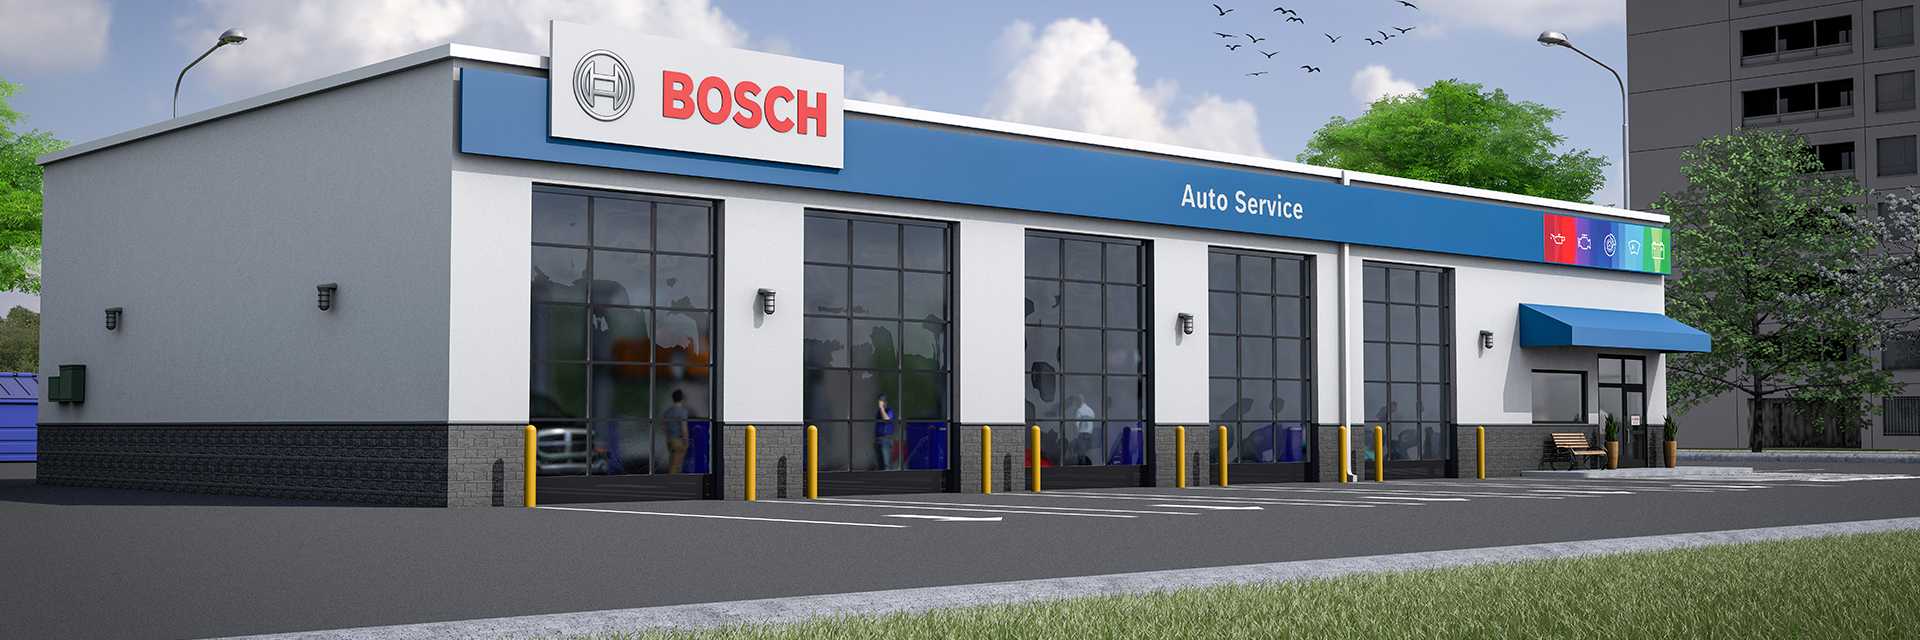 Bosch Auto Service repair shop